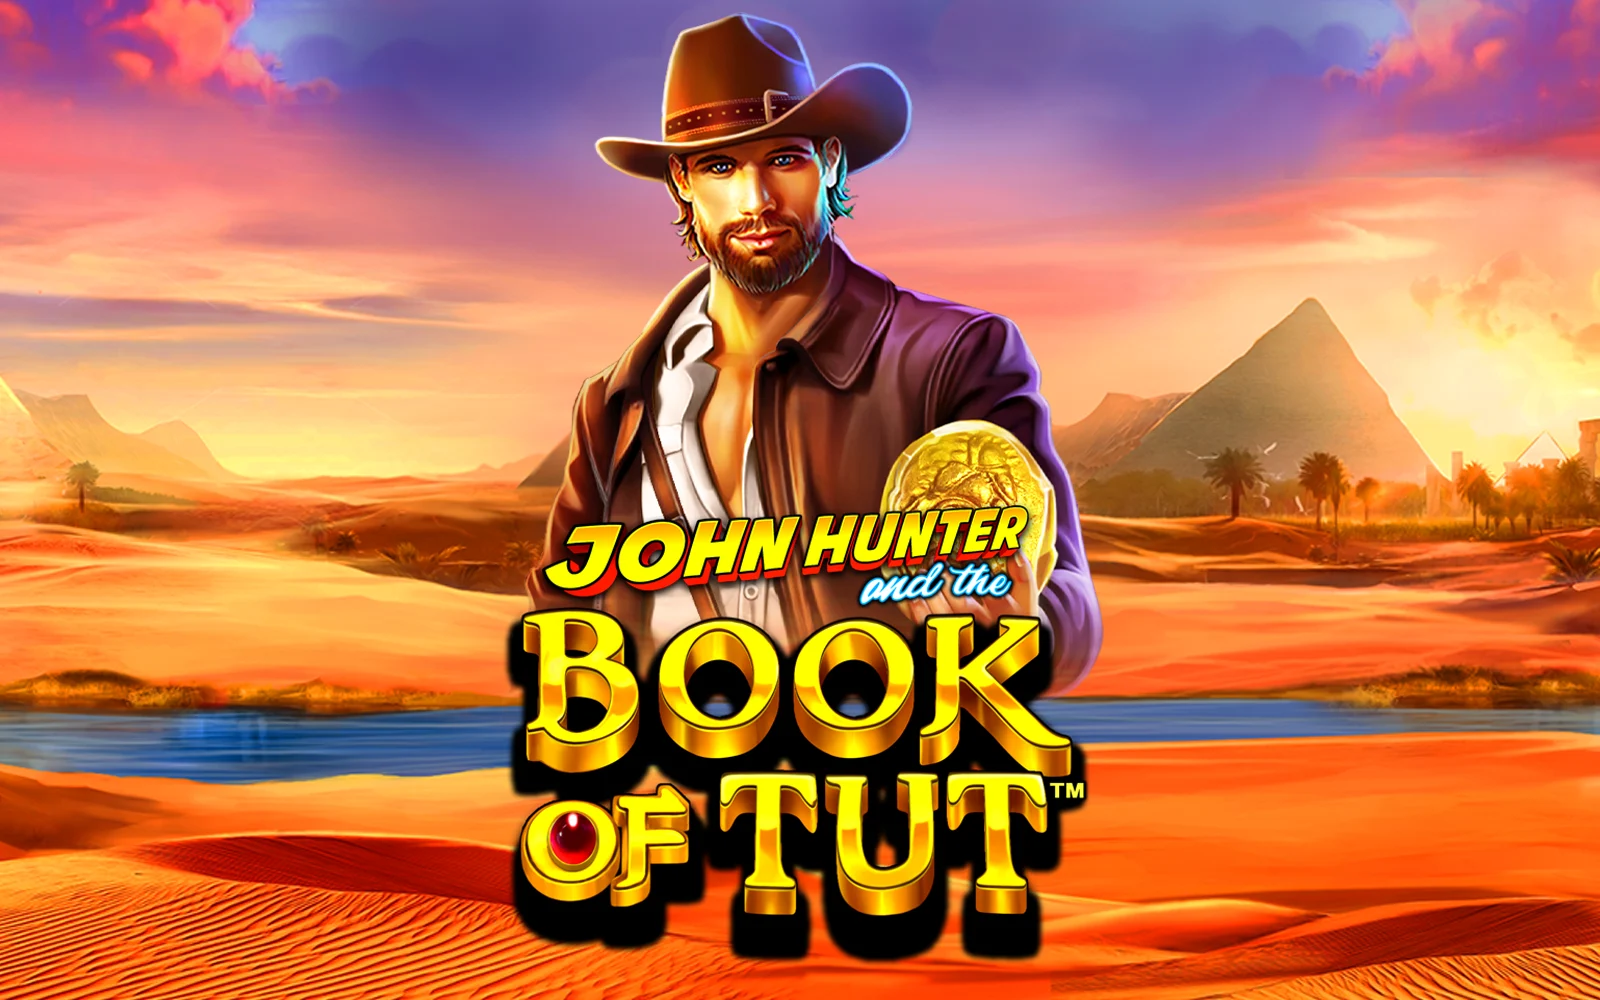 Starcasino.be online casino üzerinden John Hunter and the Book of Tut™ oynayın